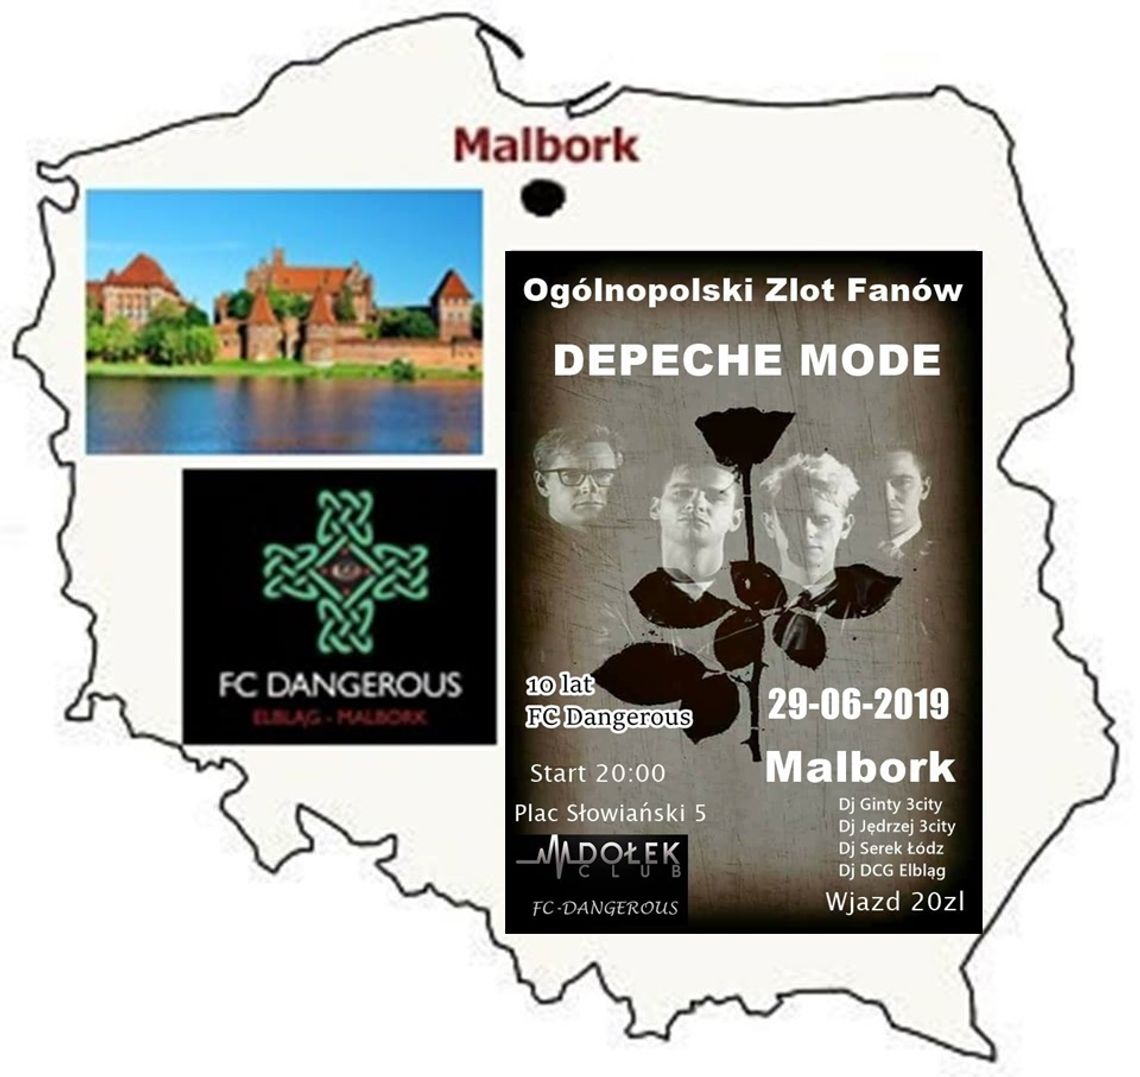 Ogólnopolski Zlot Fanów Depeche Mode Malbork 2019